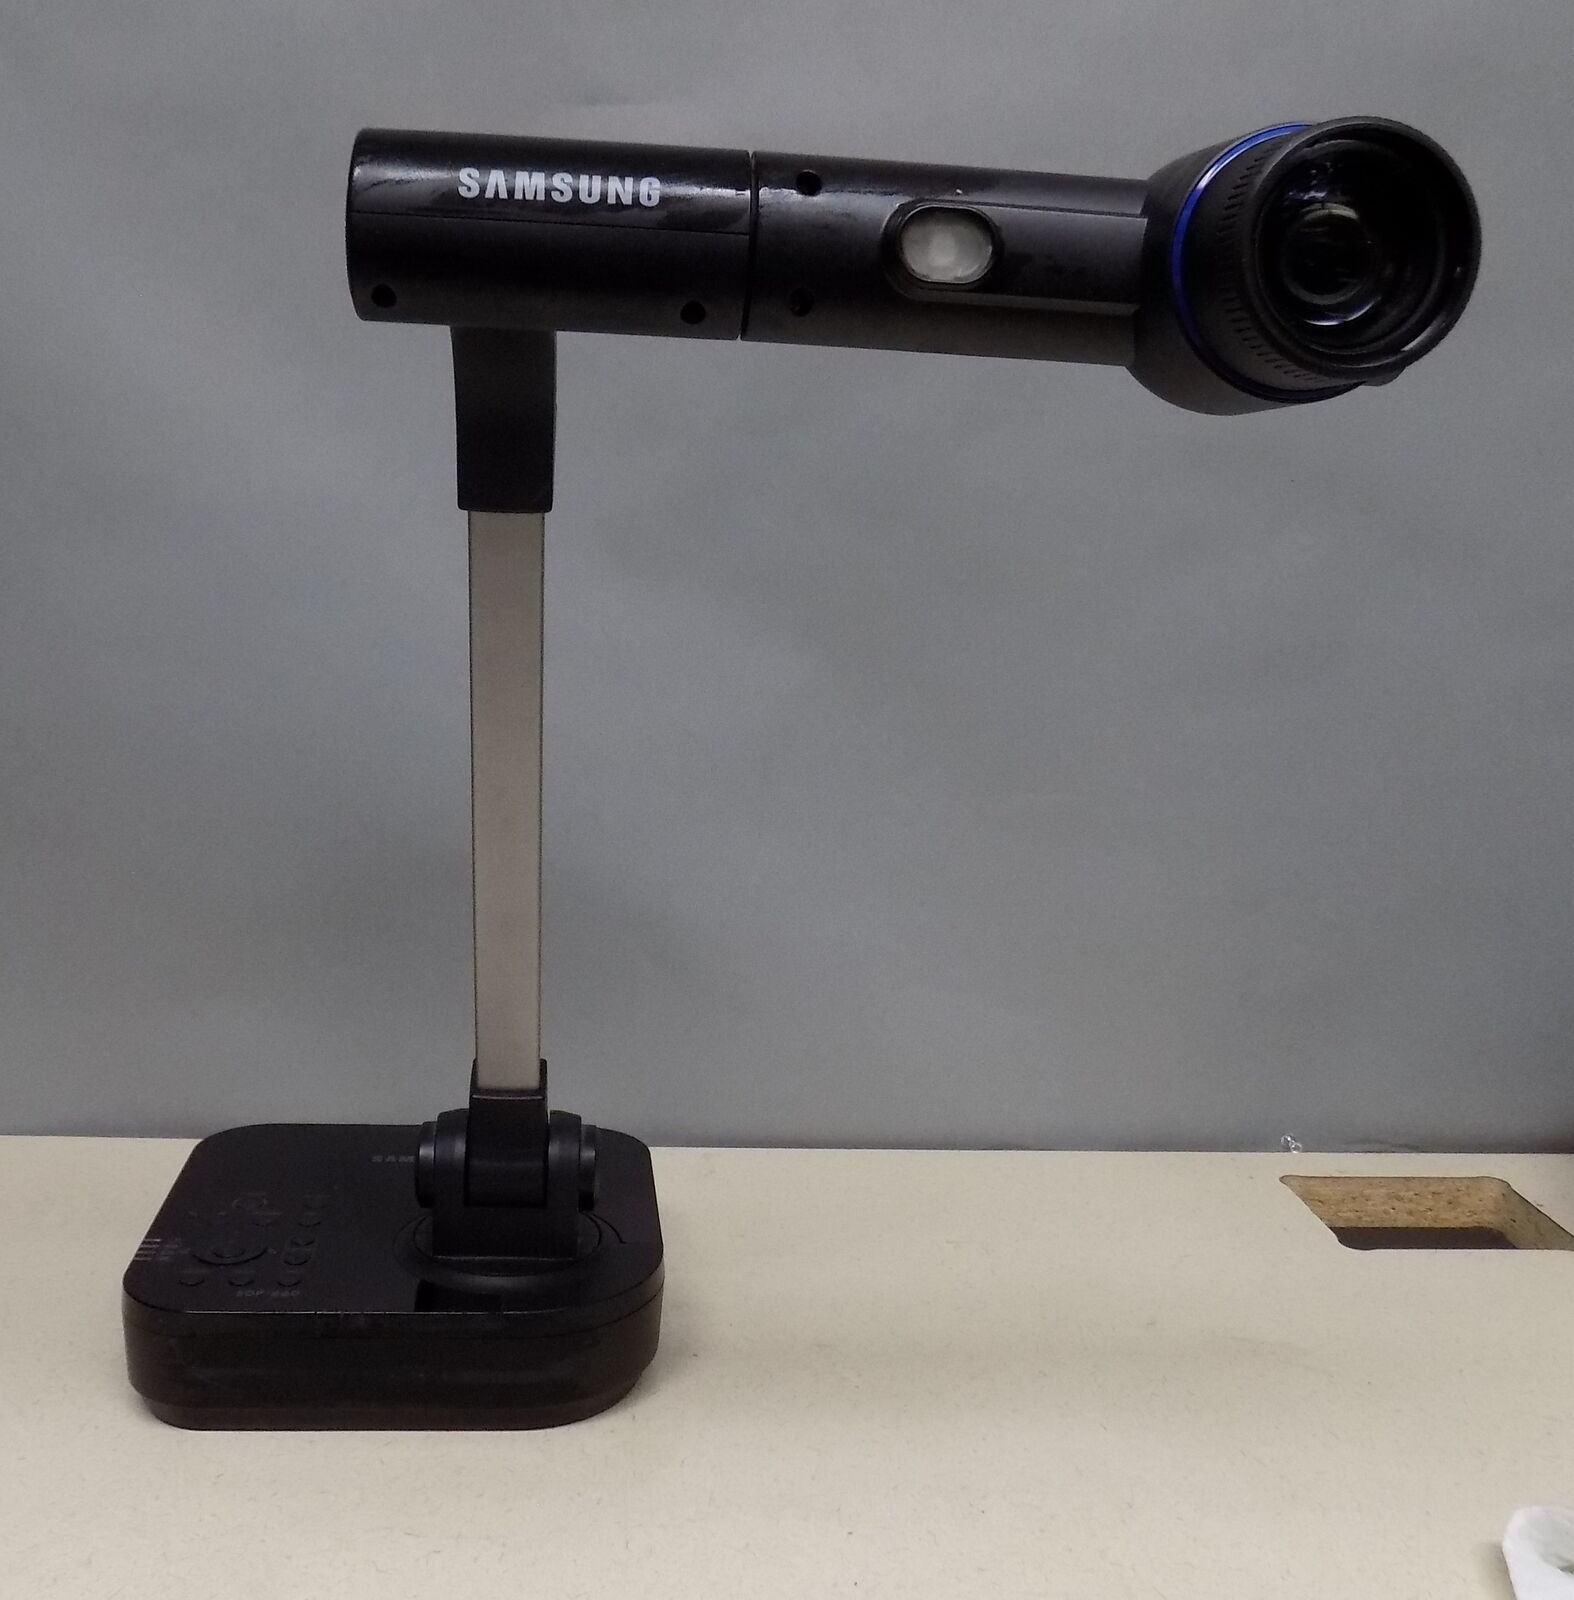 Samsung Model# SDP-860 Overhead Projection Digital Presenter/Document Camera